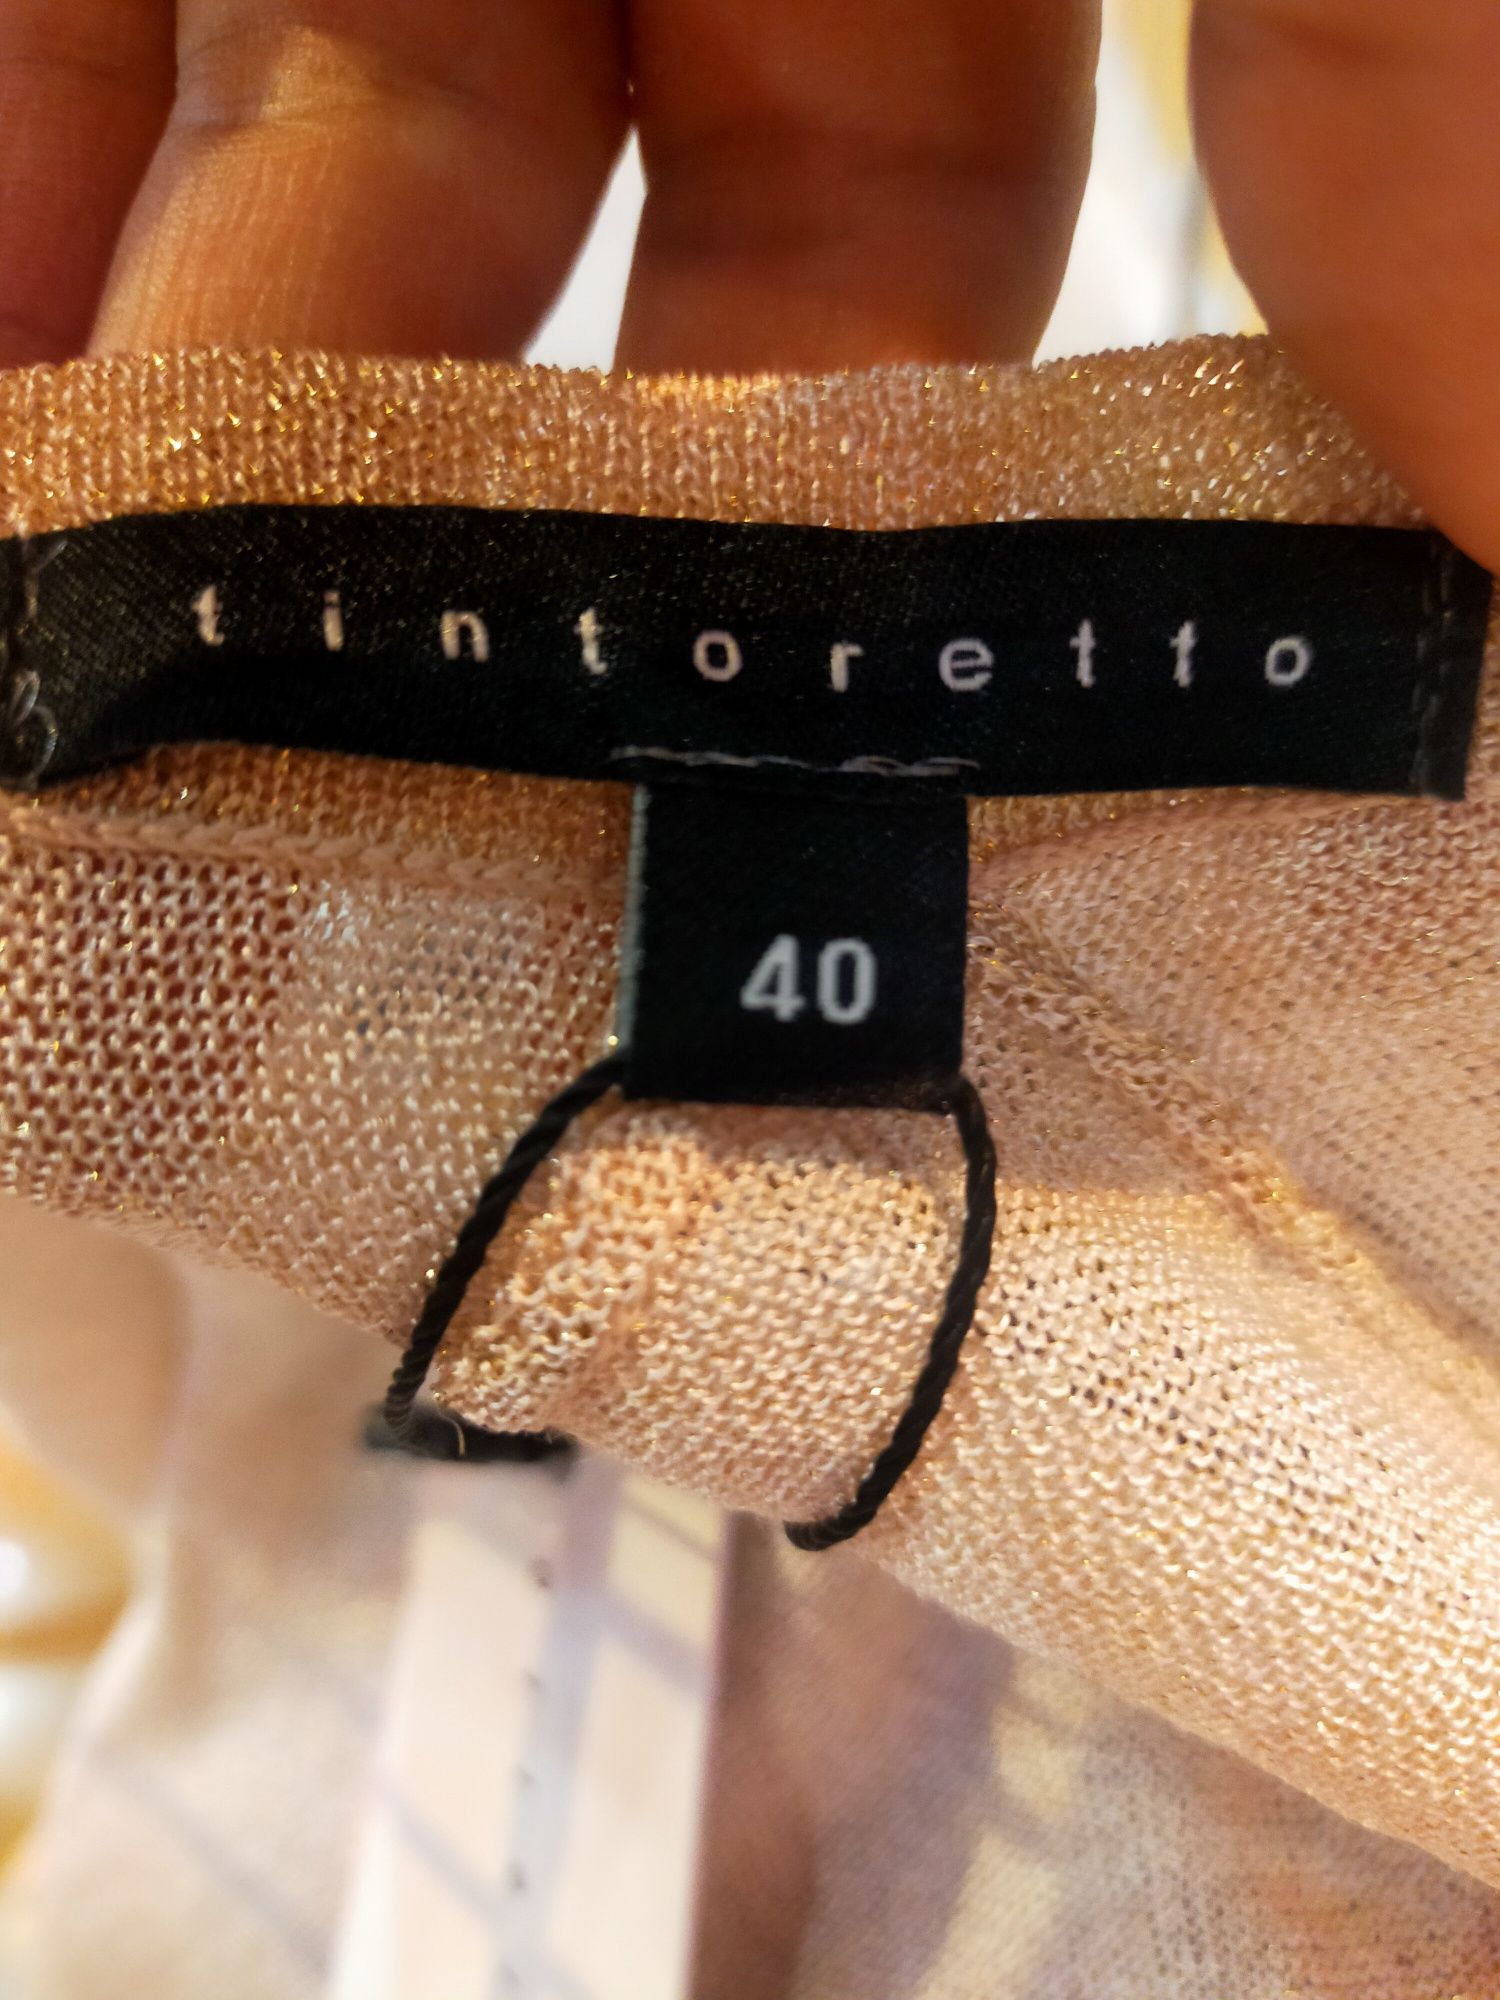 Блузка Massimo dutti, кофточка Tintoretto, худи с этикеткой